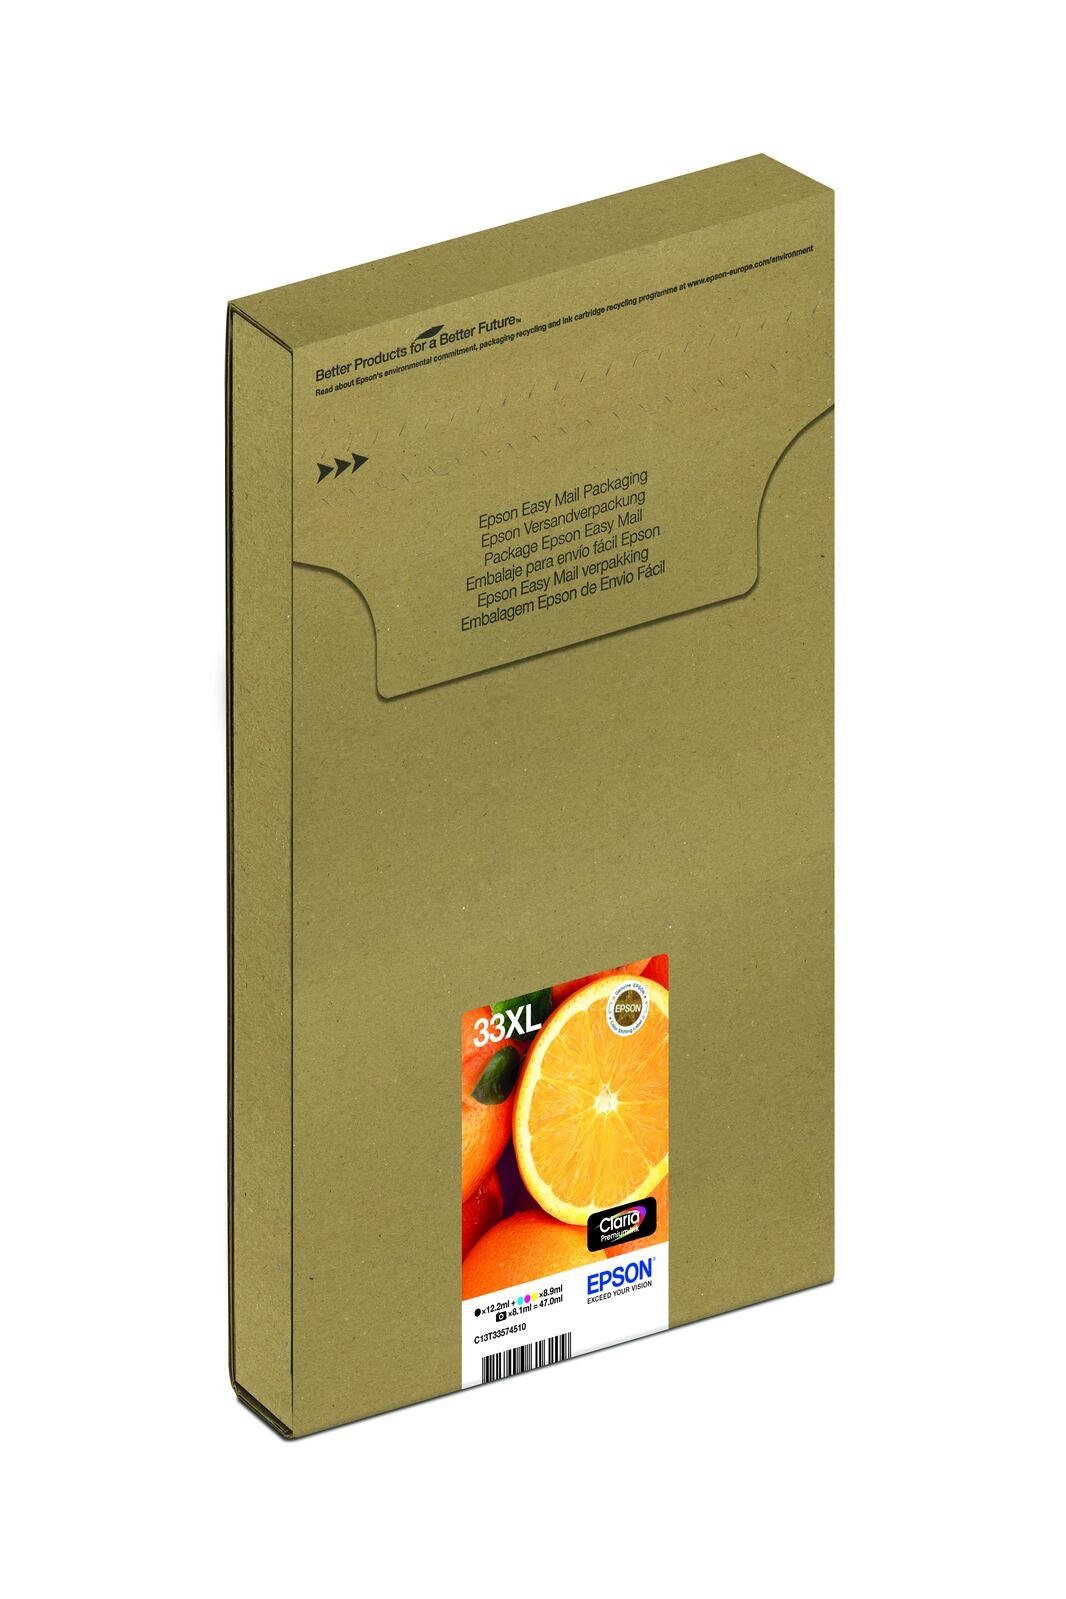 Epson Epson Easy Mail Packing 33XL Orange Druckerpatrone Tintenpatrone